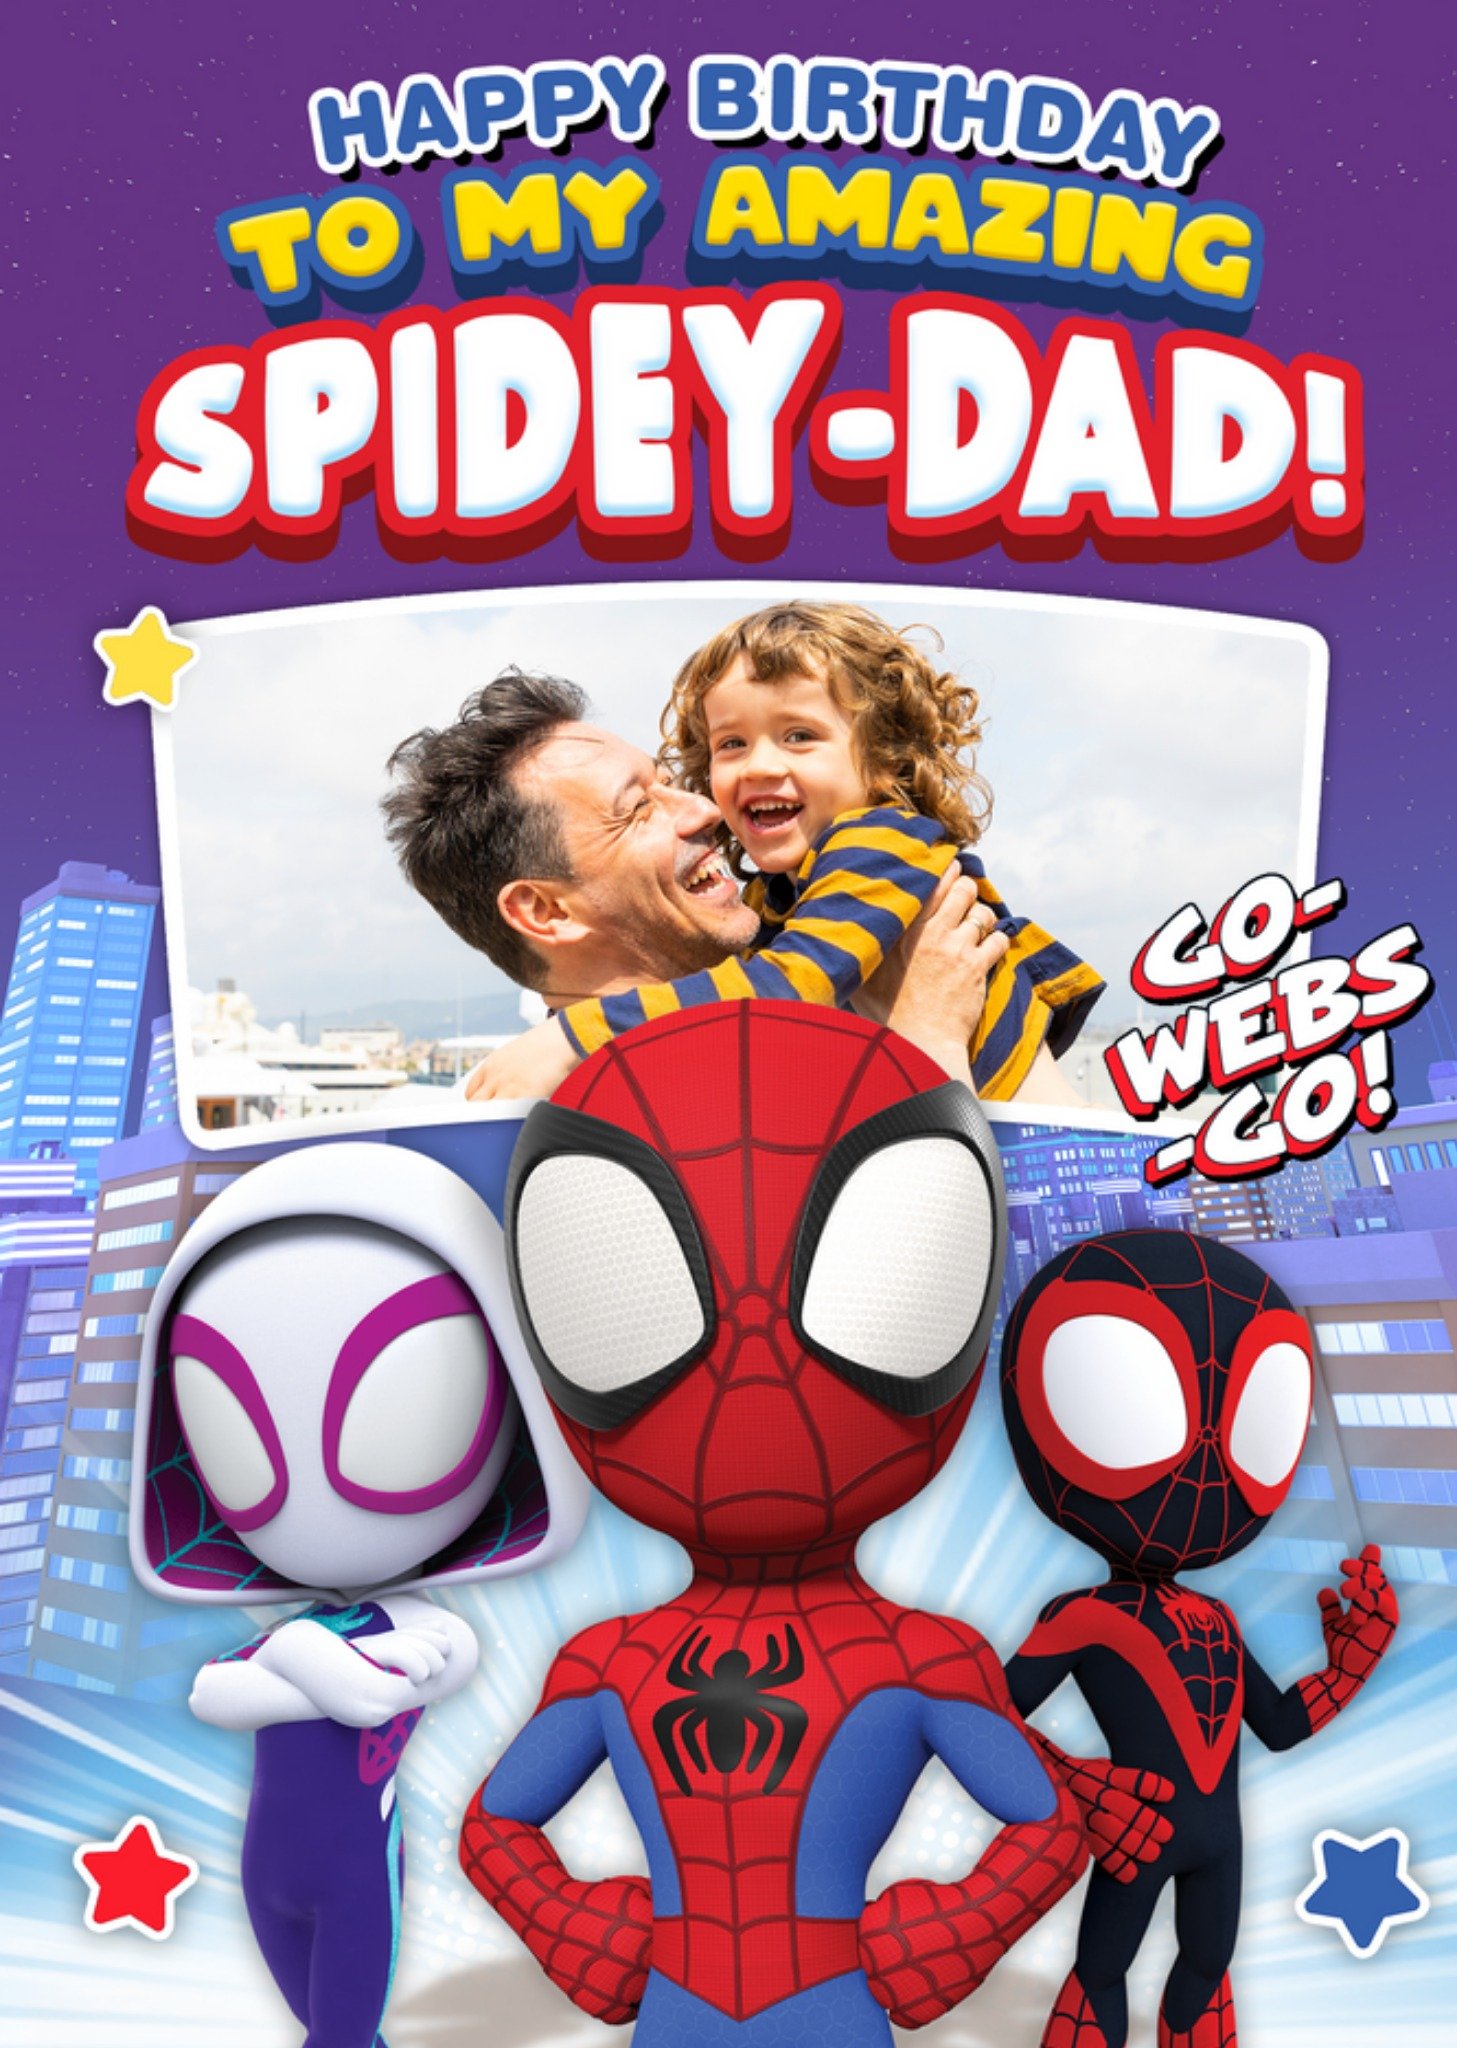 Marvel Spidey And His Amazing Friends Photo Upload Spidey-Dad Birthday Card Ecard